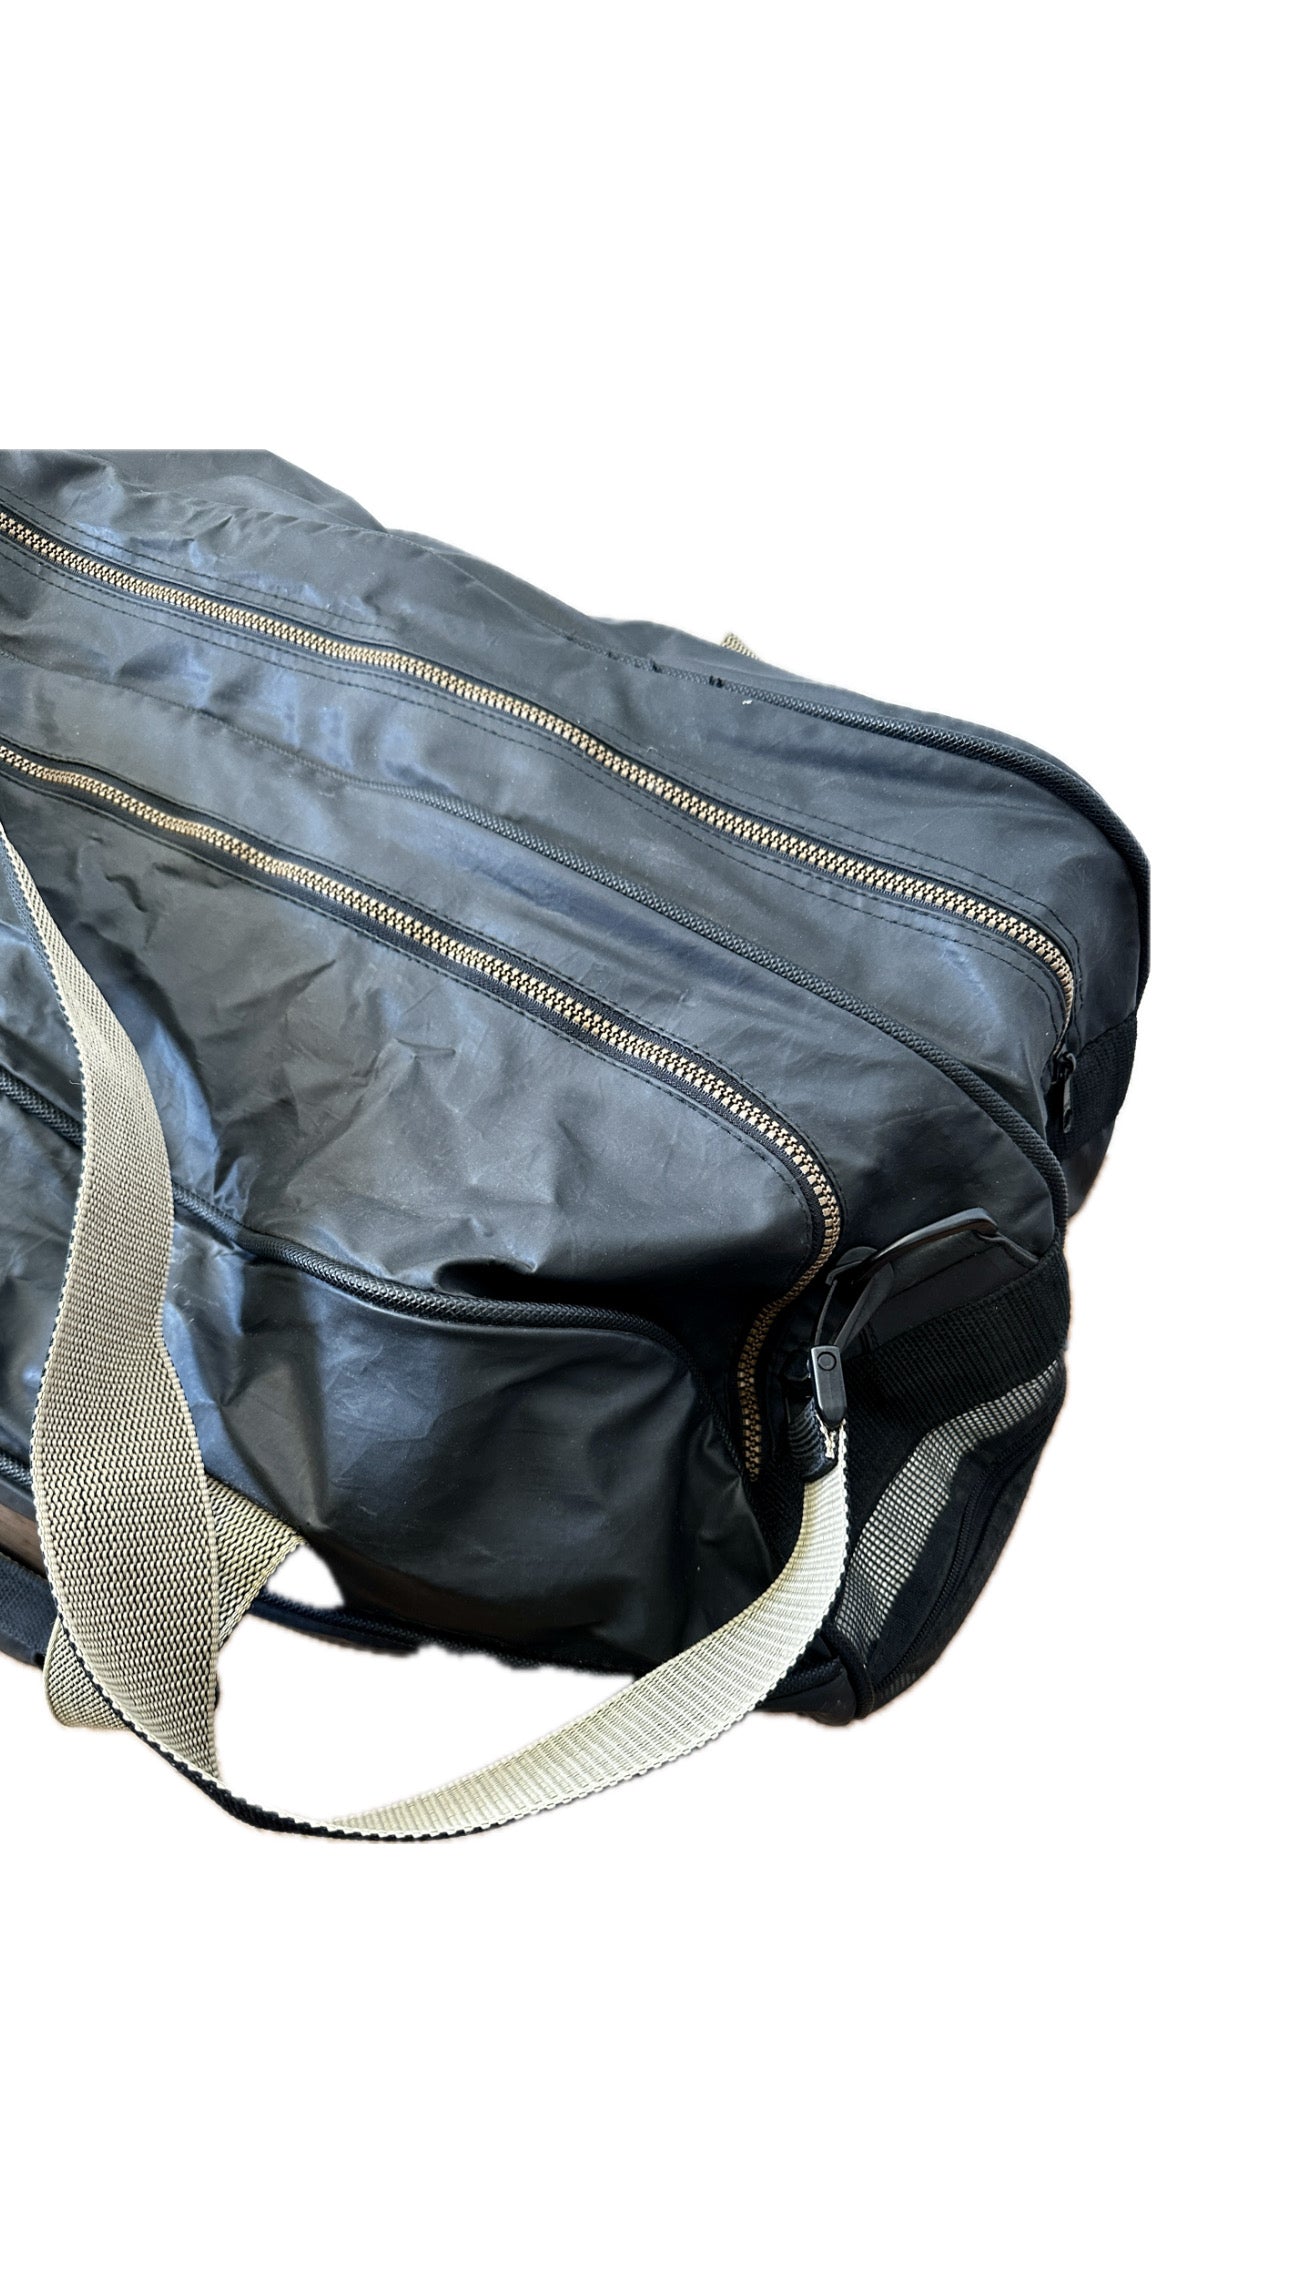 Nike Vintage Grey Tag 1993 Big Leather Bag